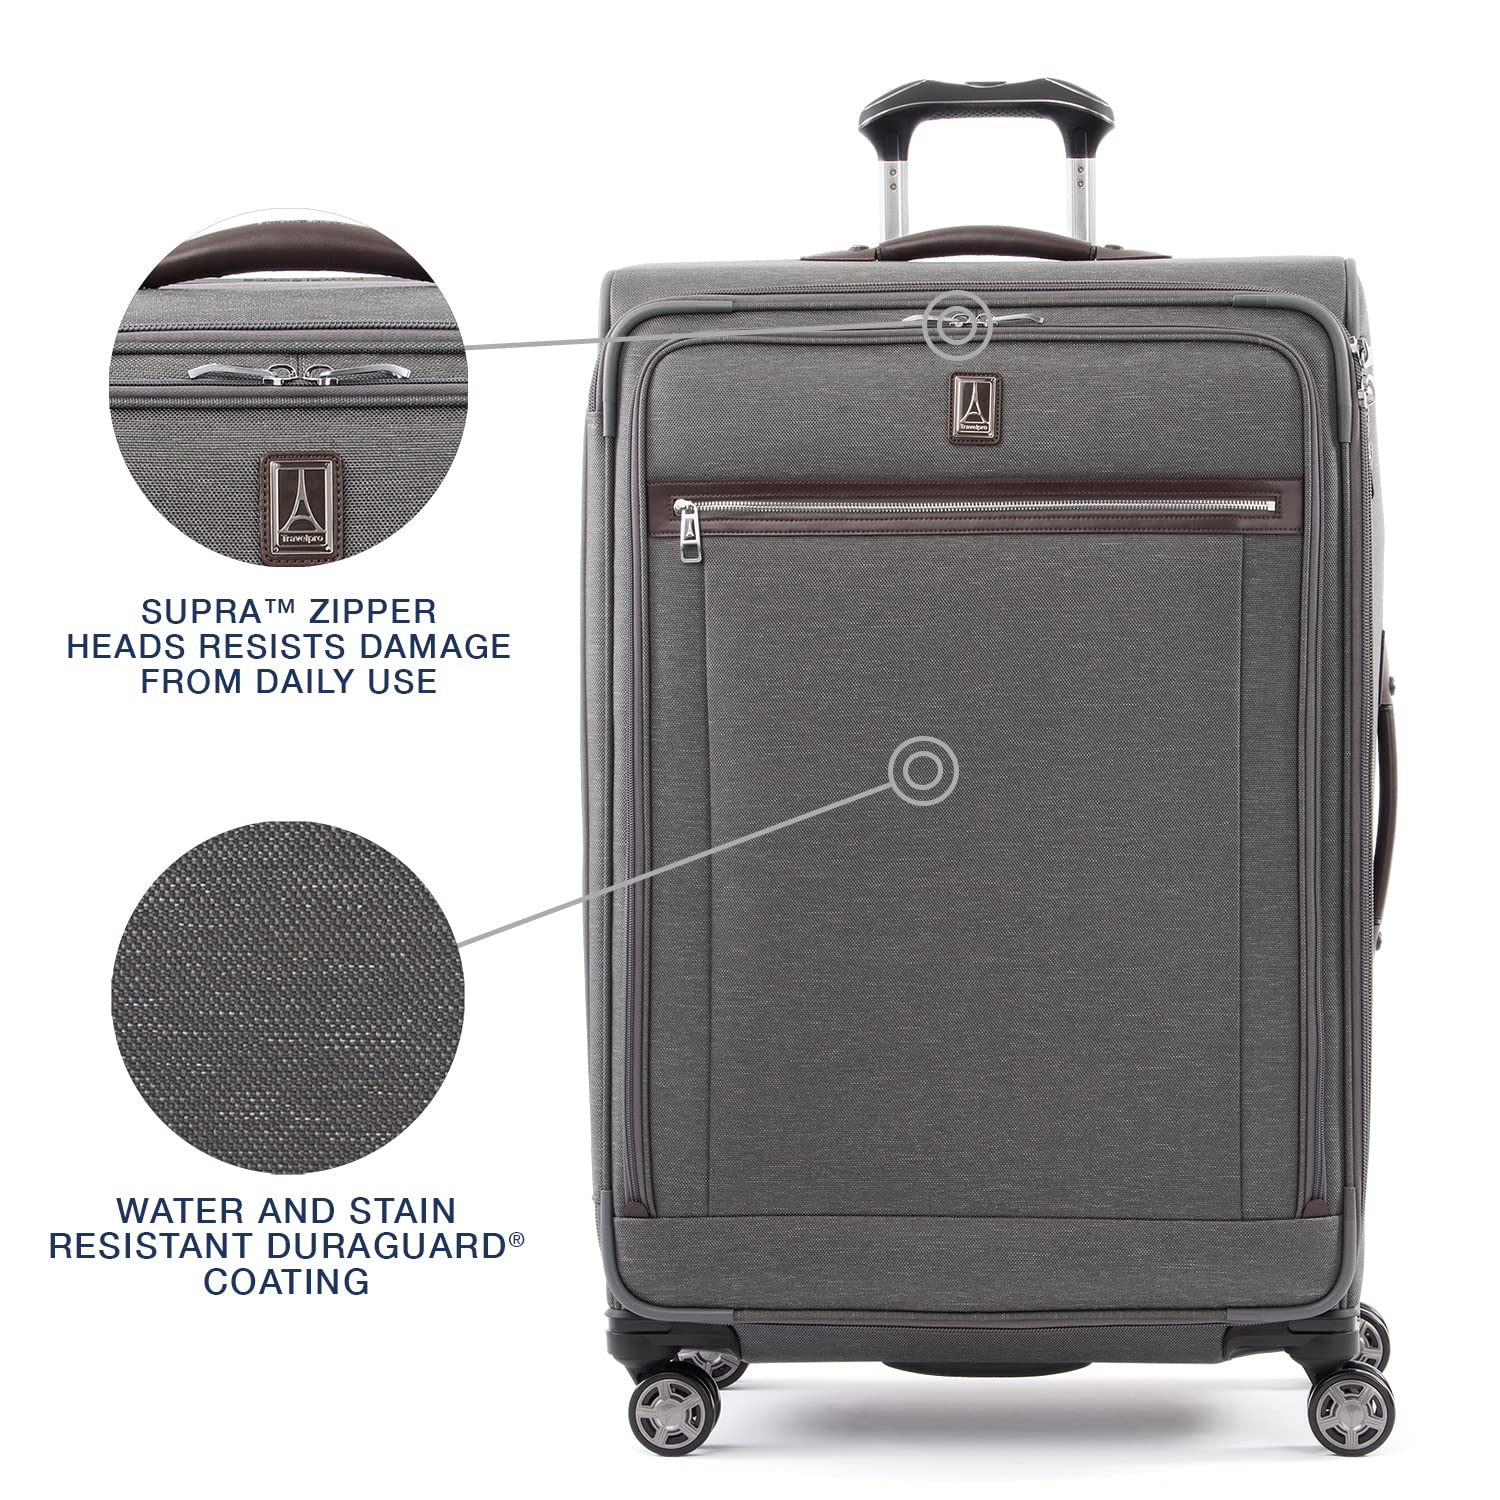 Travelpro Platinum Elite Softside Expandable Luggage, 8 Wheel Spinner Suitcase, TSA Lock, Men and Women, Vintage Grey, Checked-Large 29-Inch